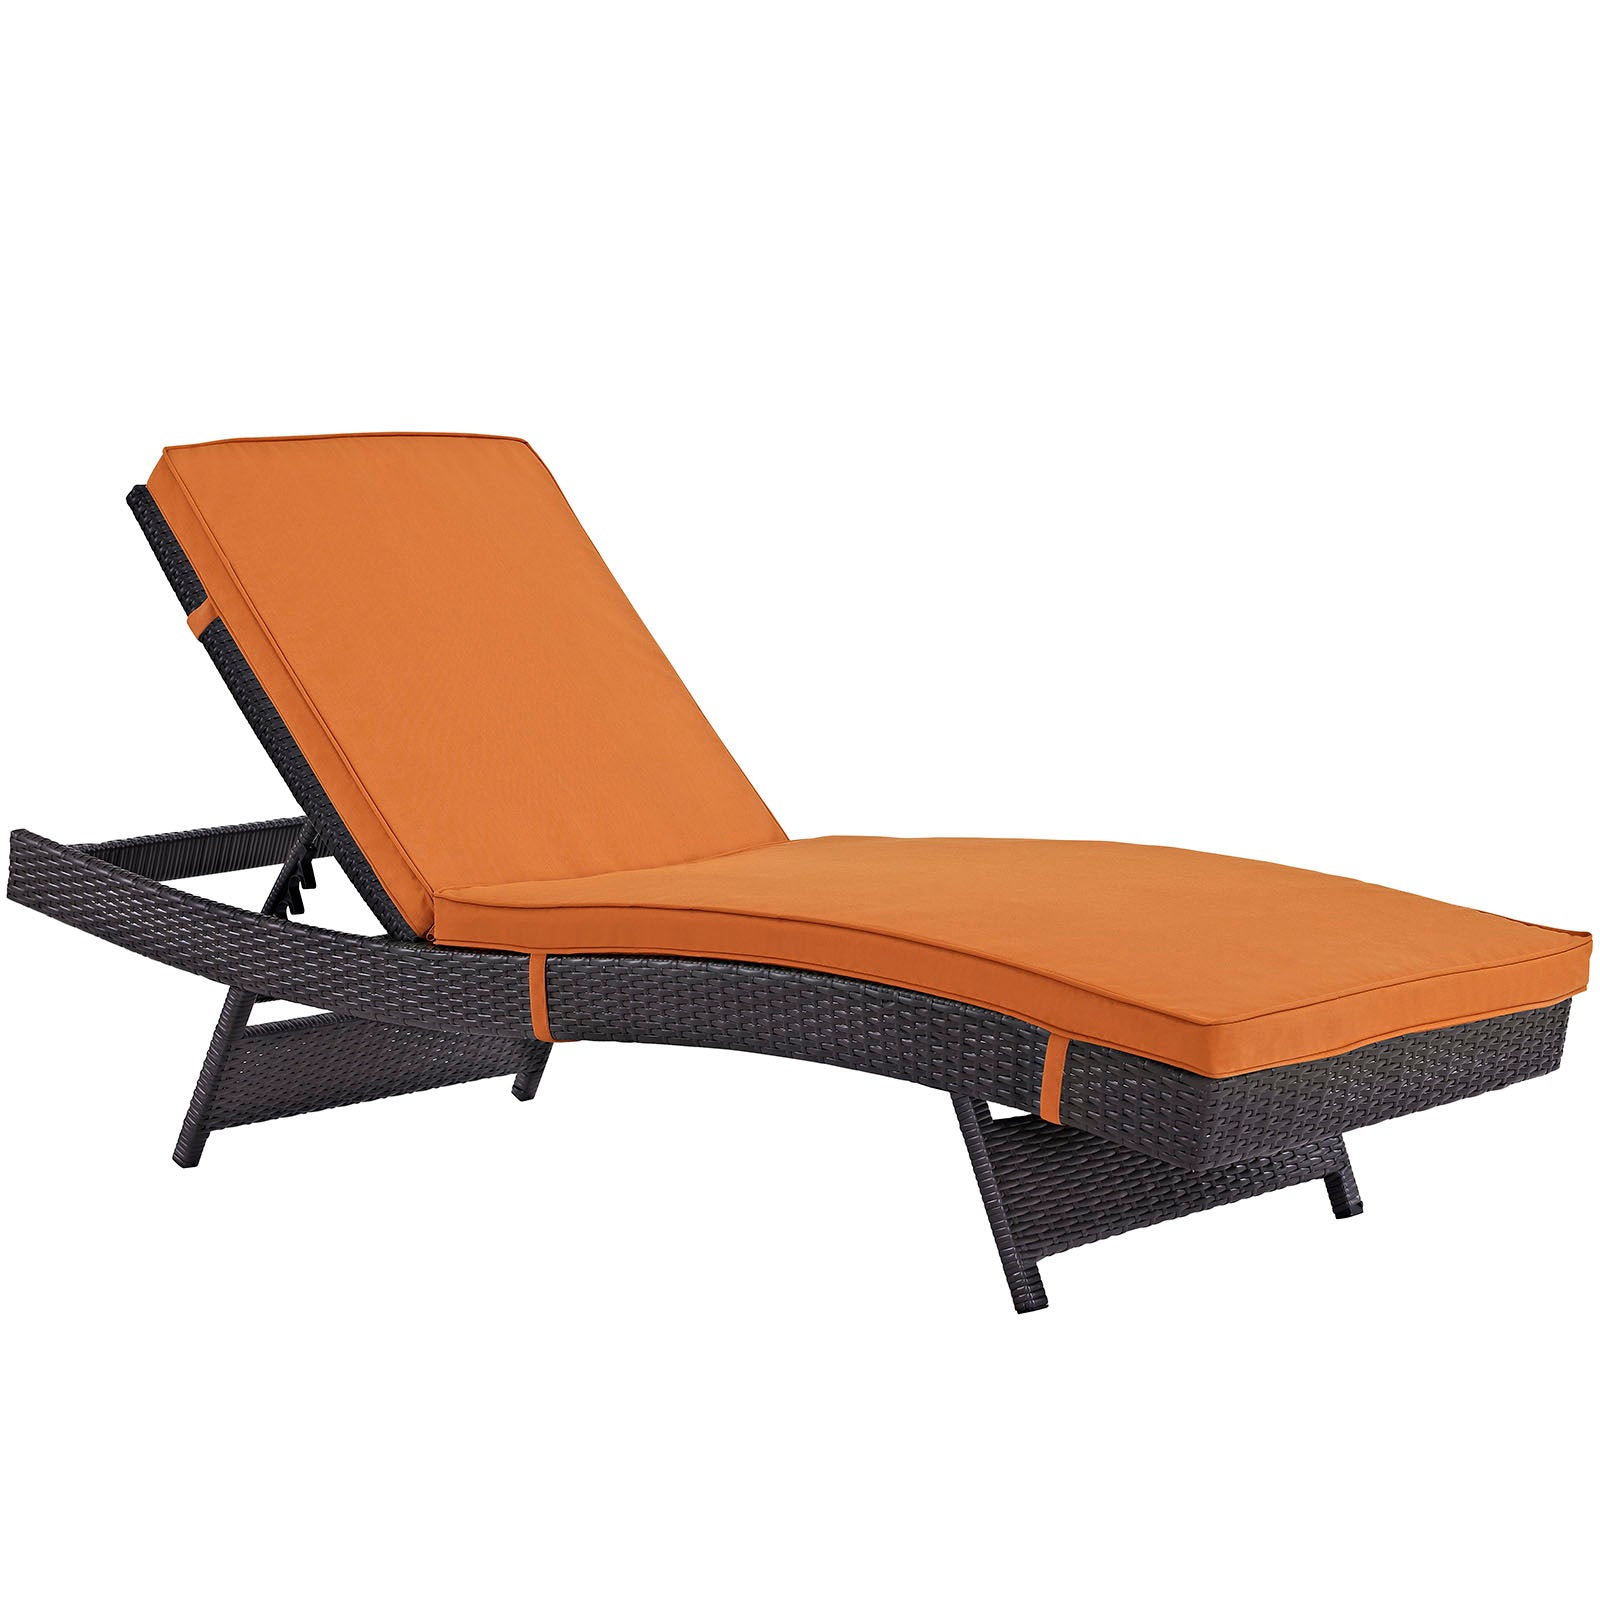 Modway Outdoor Loungers - Convene Outdoor Patio Chaise Espresso Orange